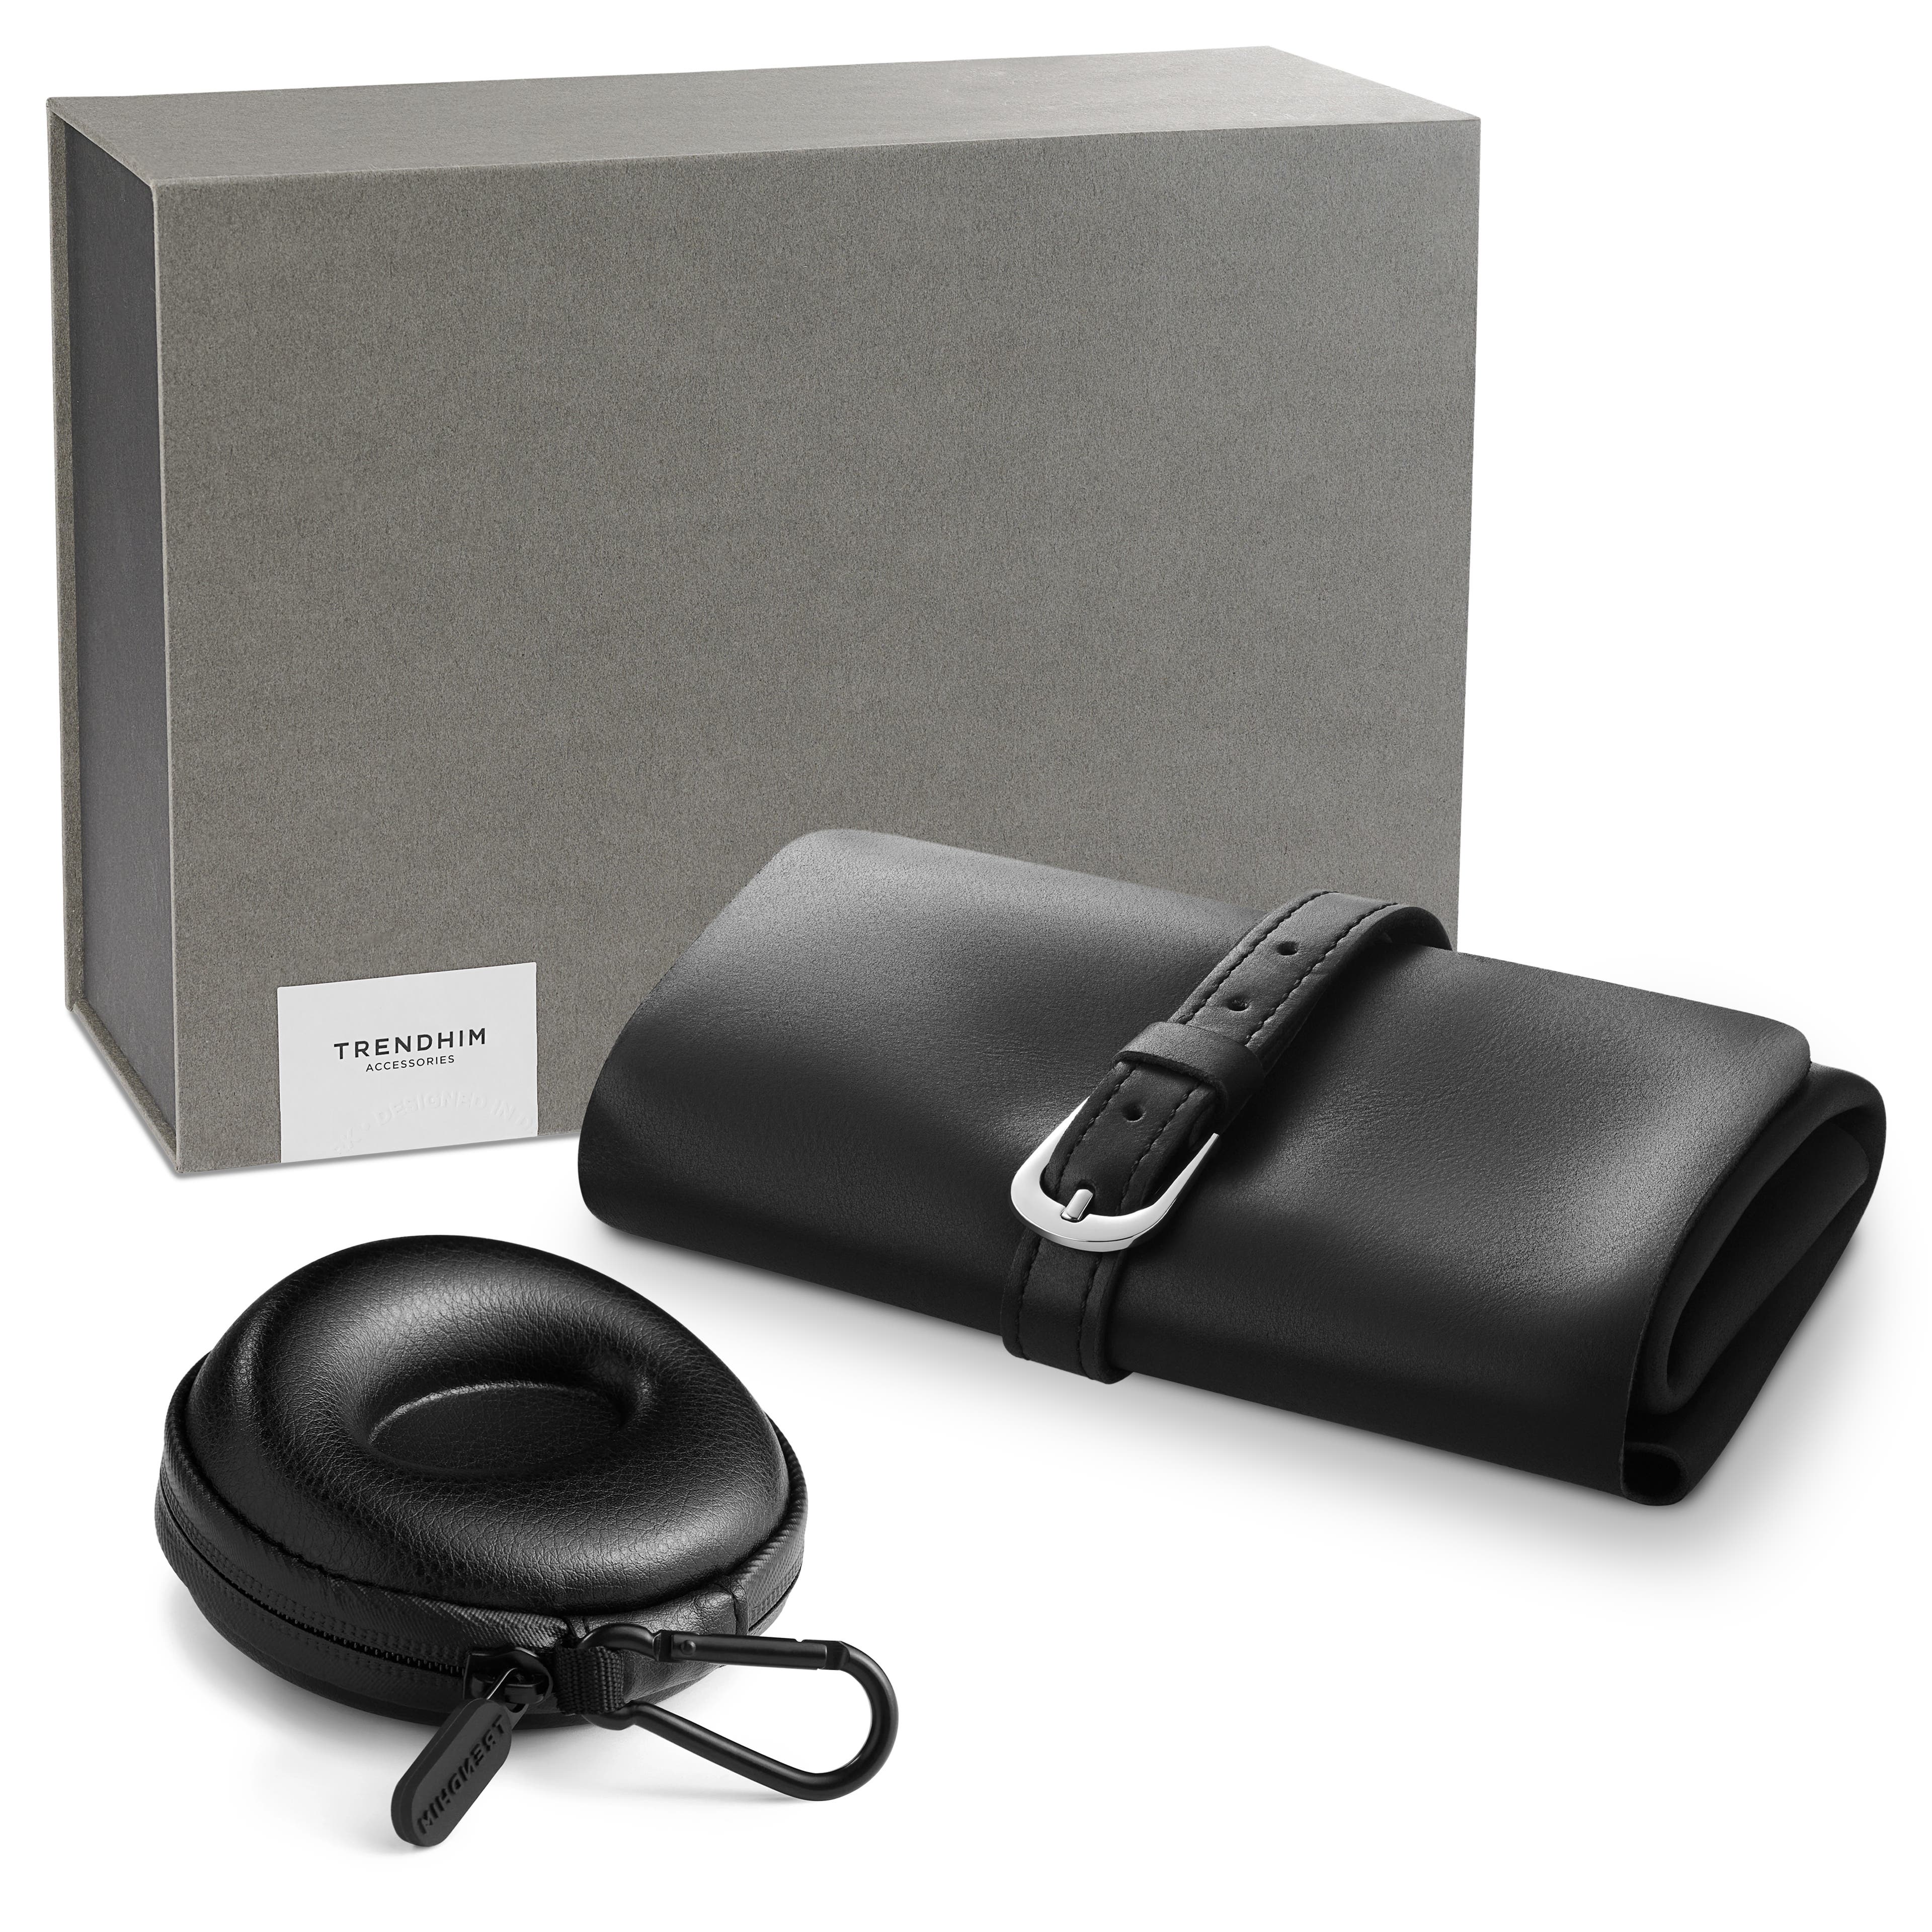 Travel Organizer Gift Box | Black Leather